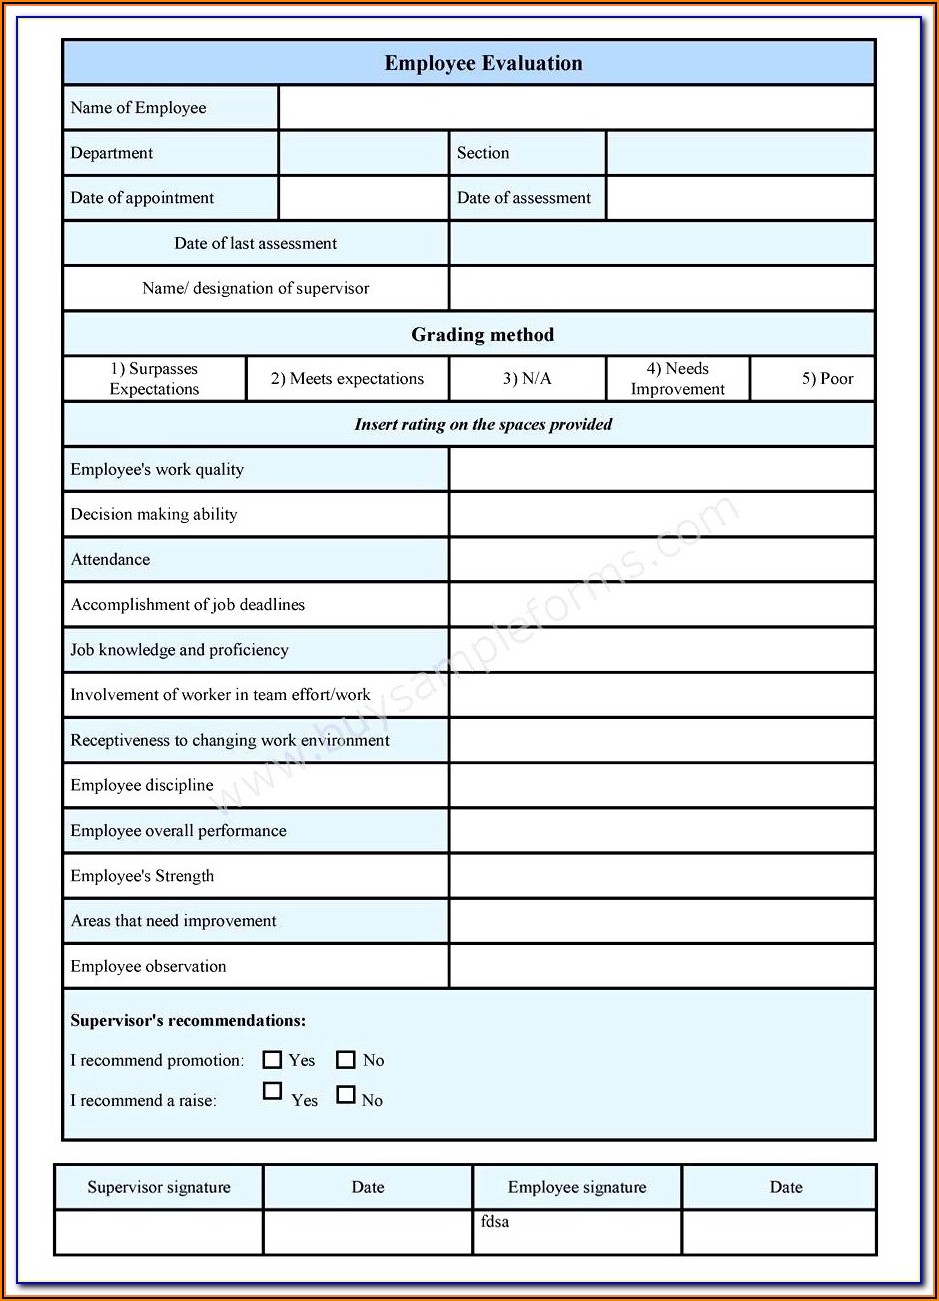 Employee Evaluation Form Pdf